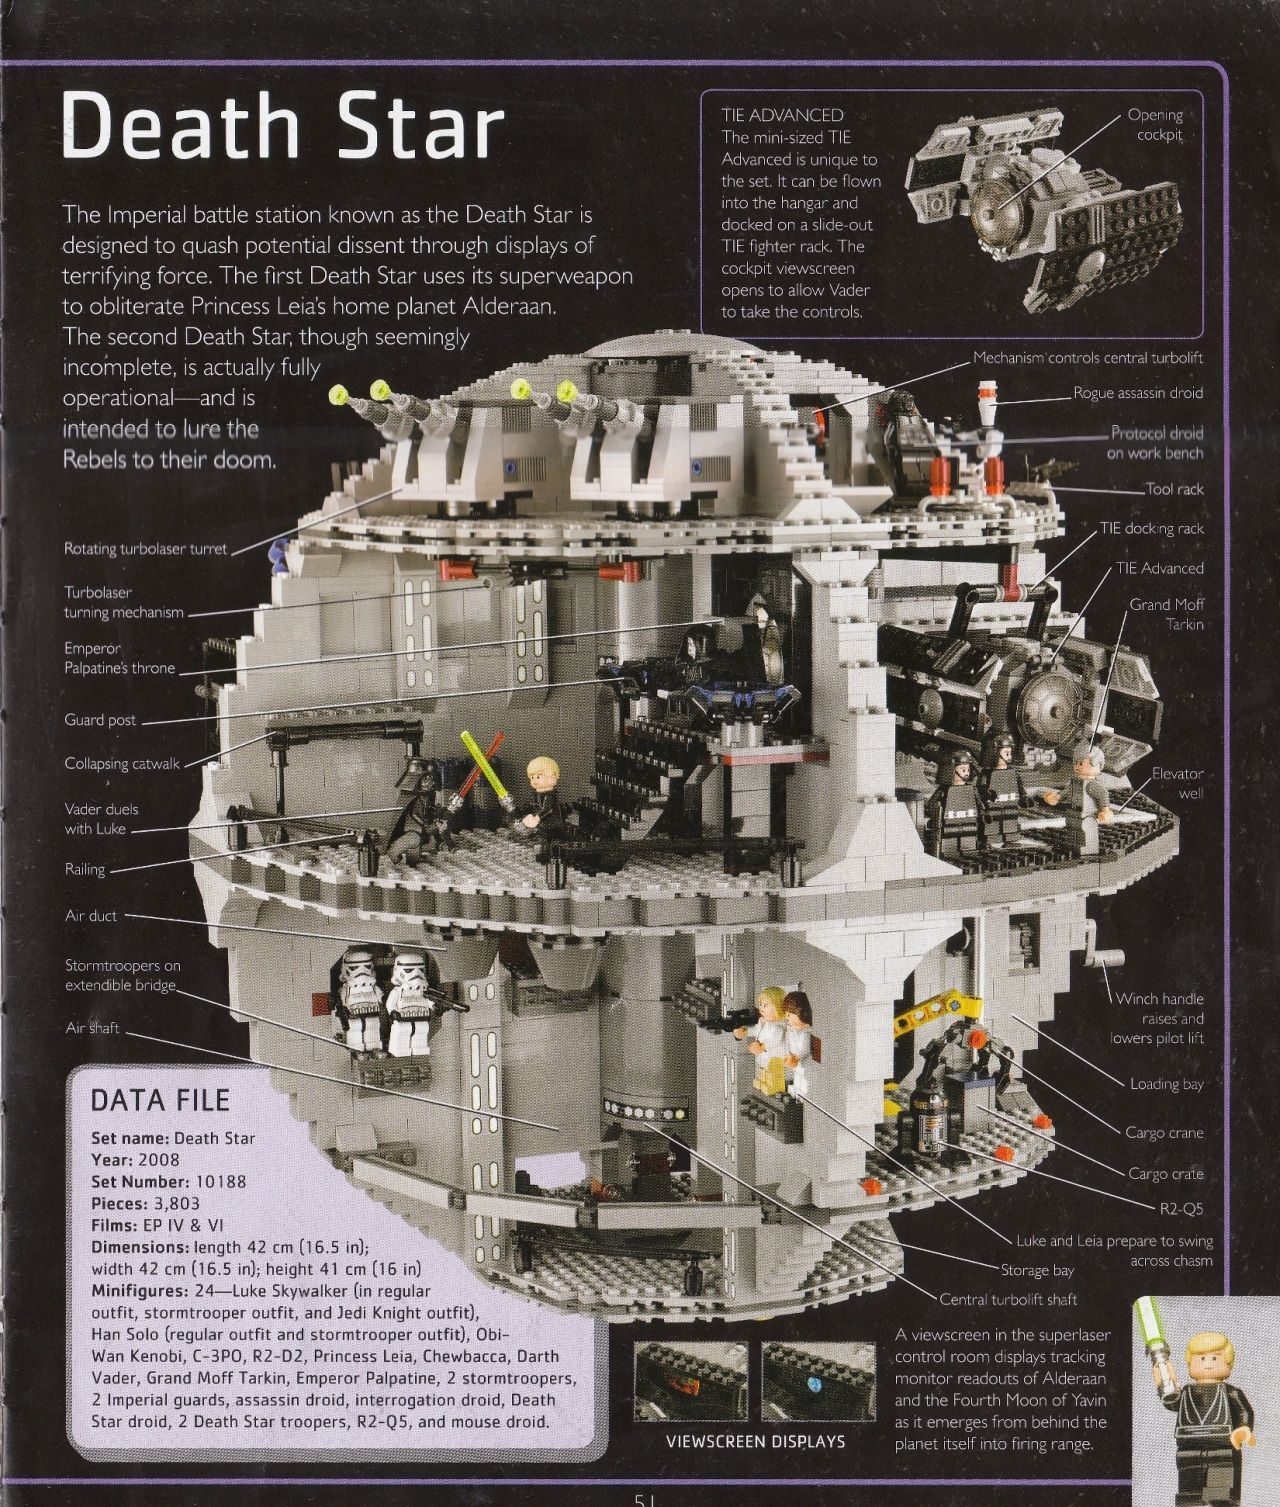 Lego Star Wars The Visual Dictionary 2009 Lego Star Wars The Visual Dictionary 2009 52